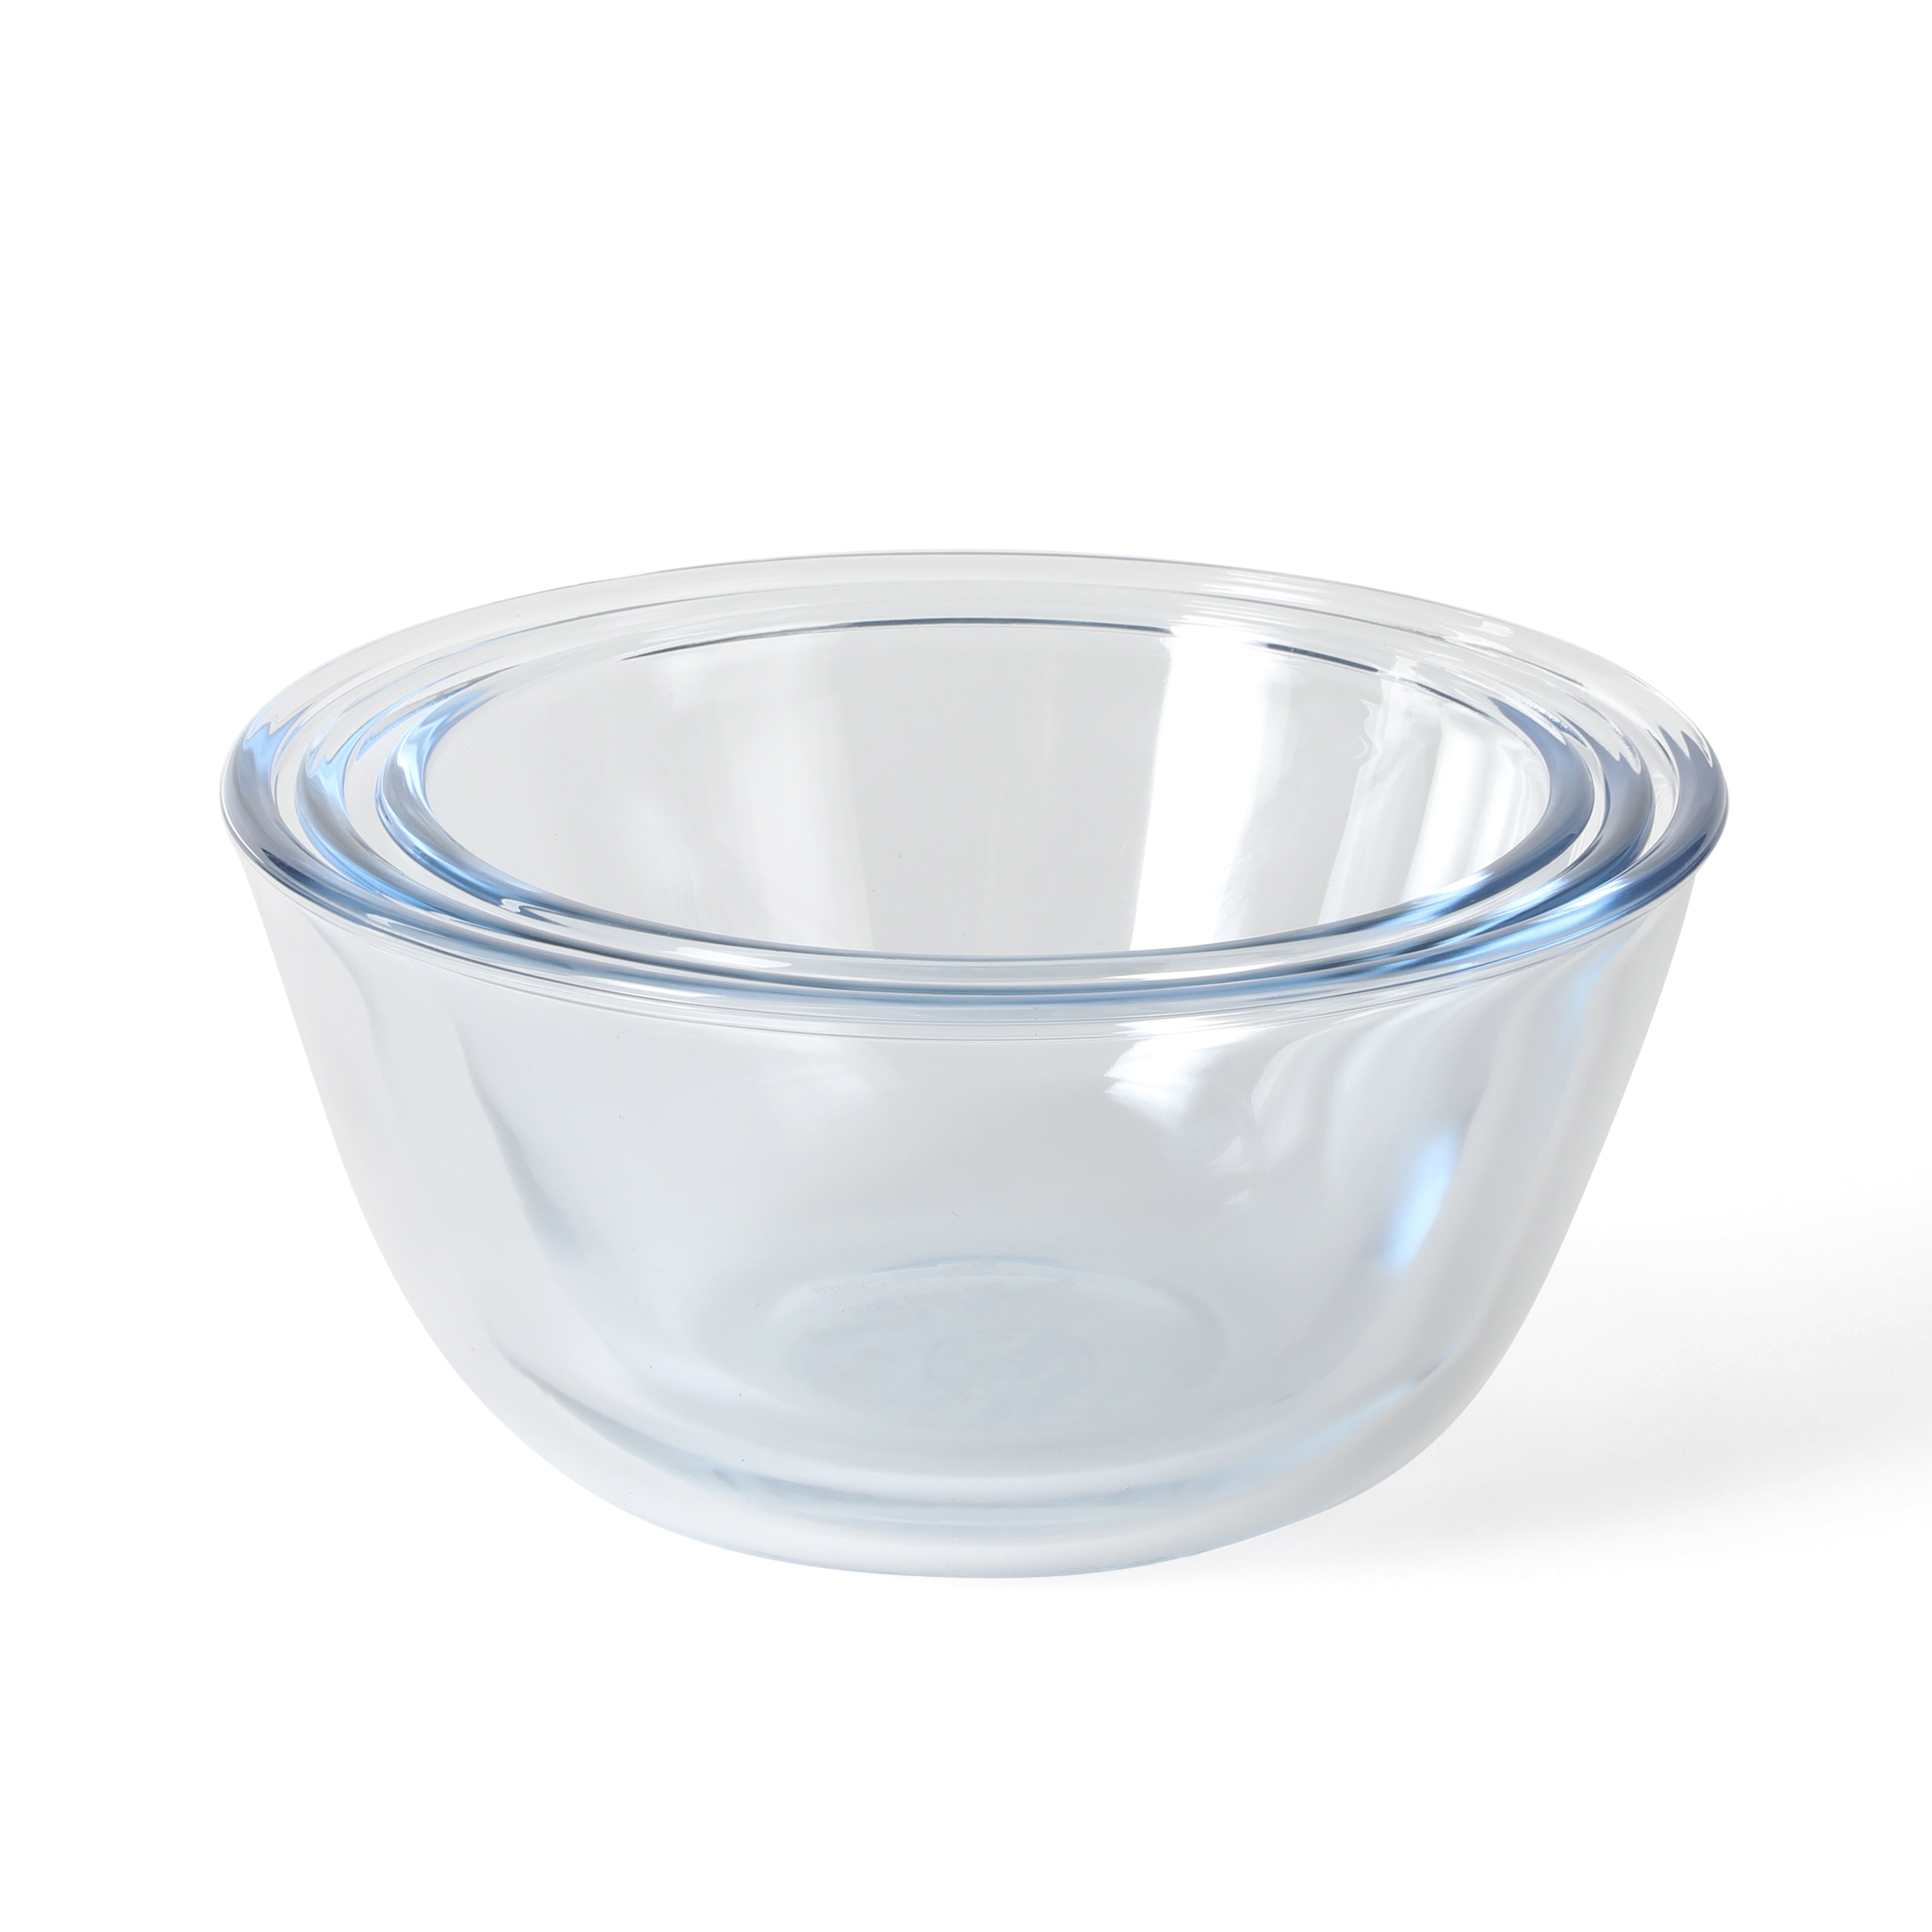 Brosilicate Rectangular Round Glass Mixing Bowl